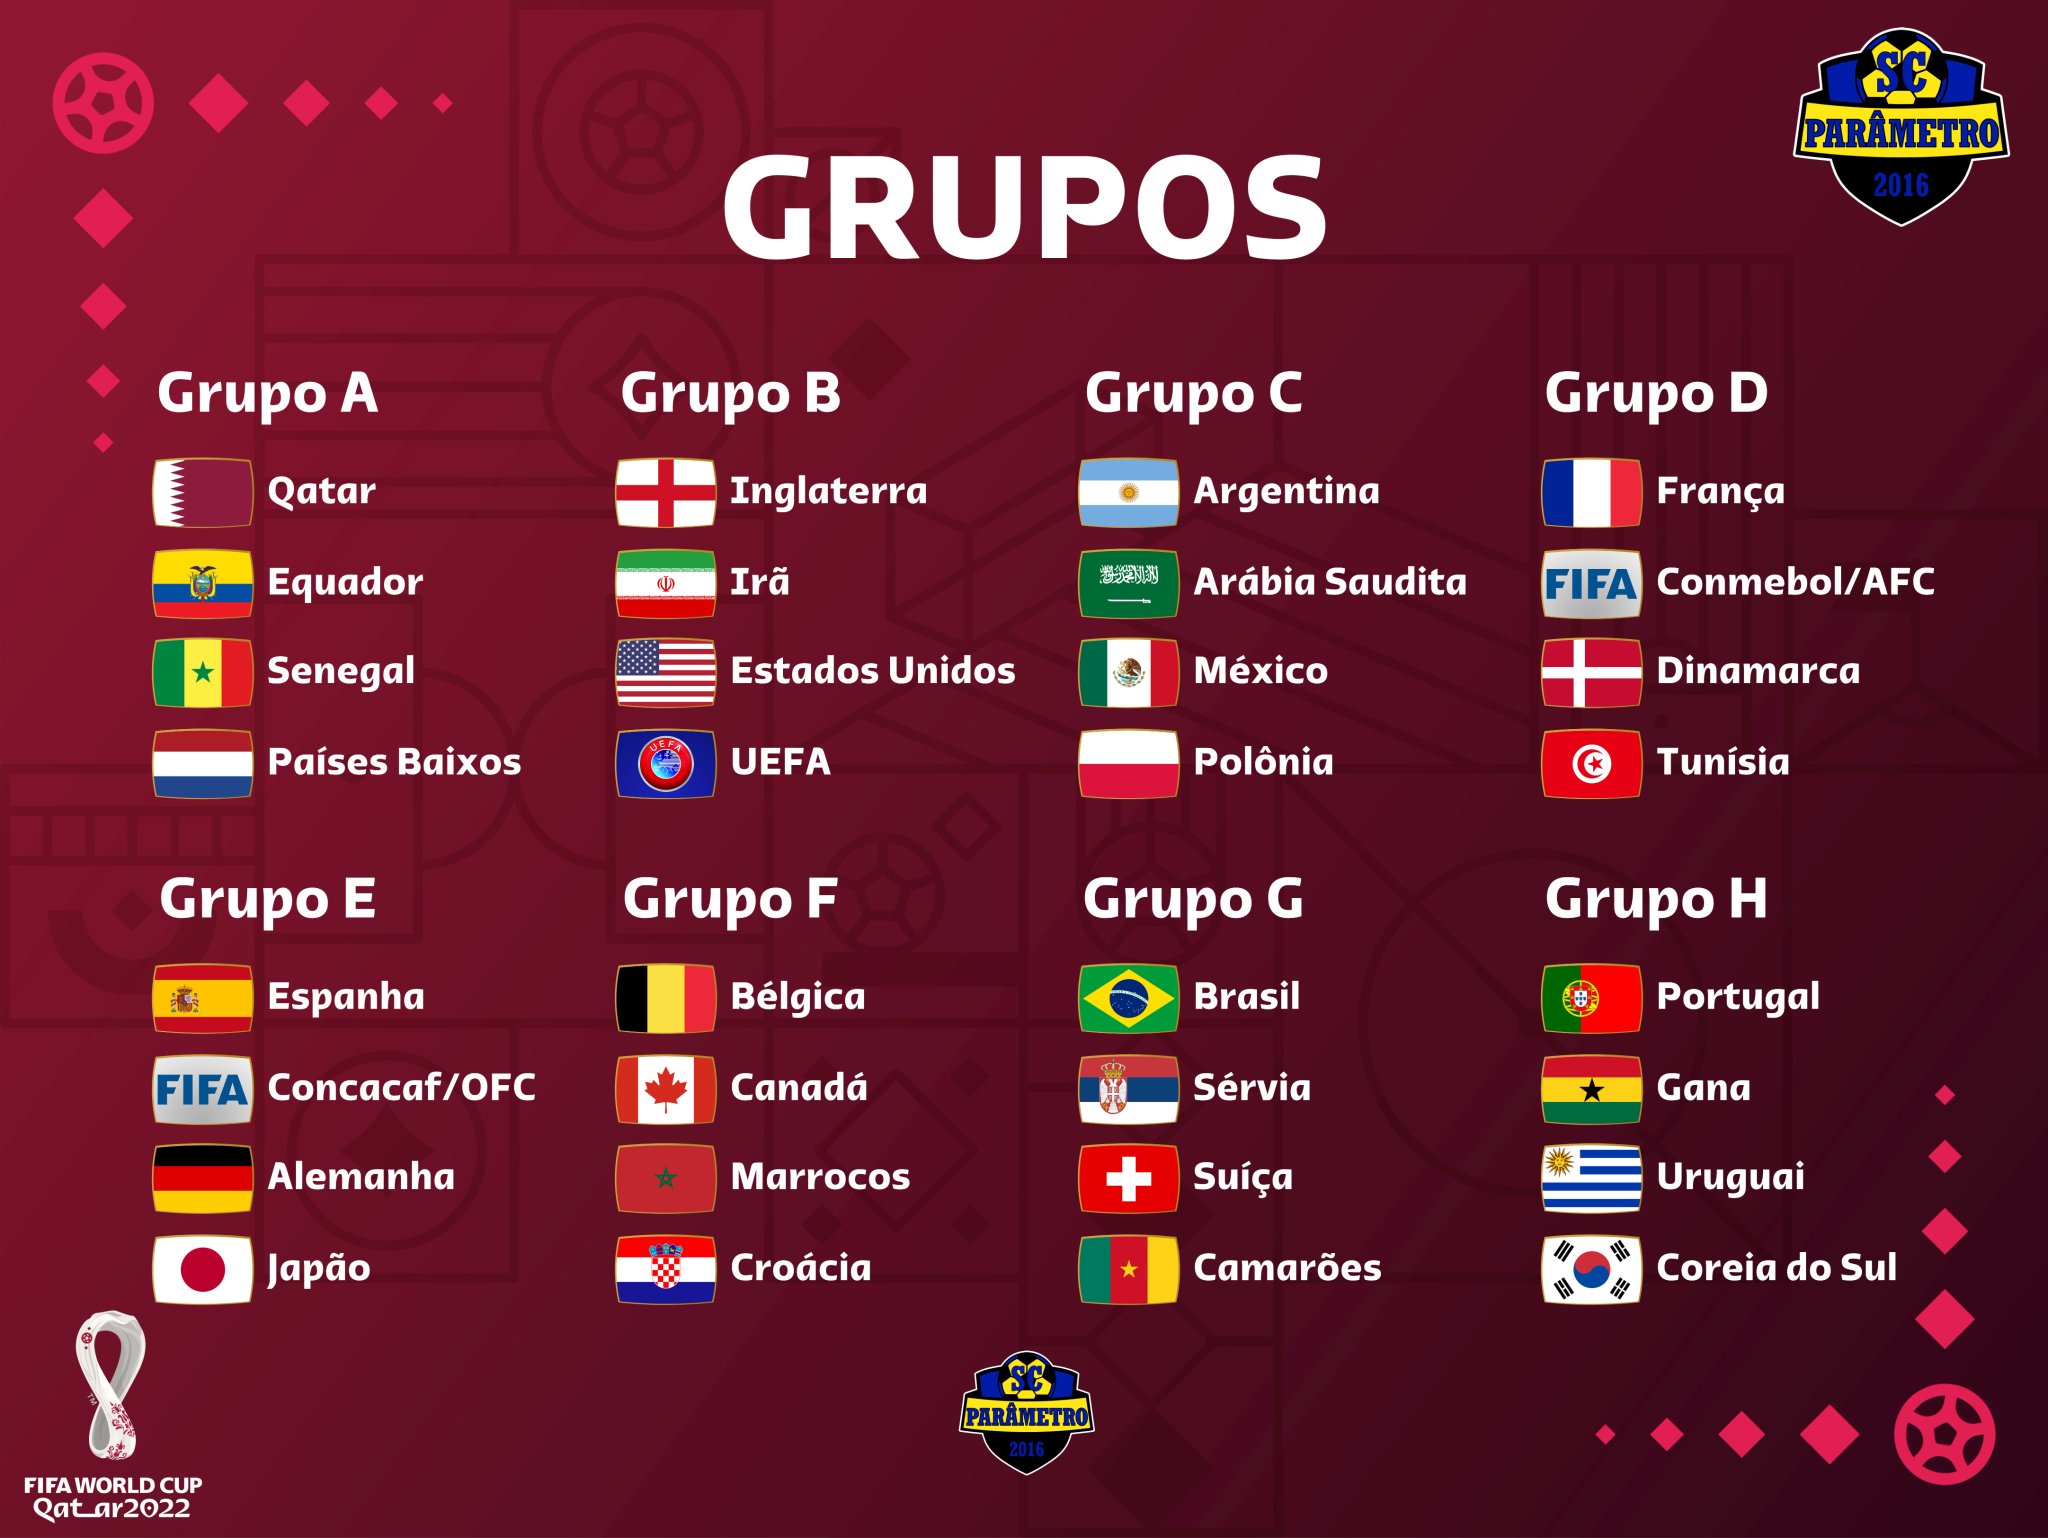 Analise dos grupos da Copa do Mundo 2018 - Grupos G e H 